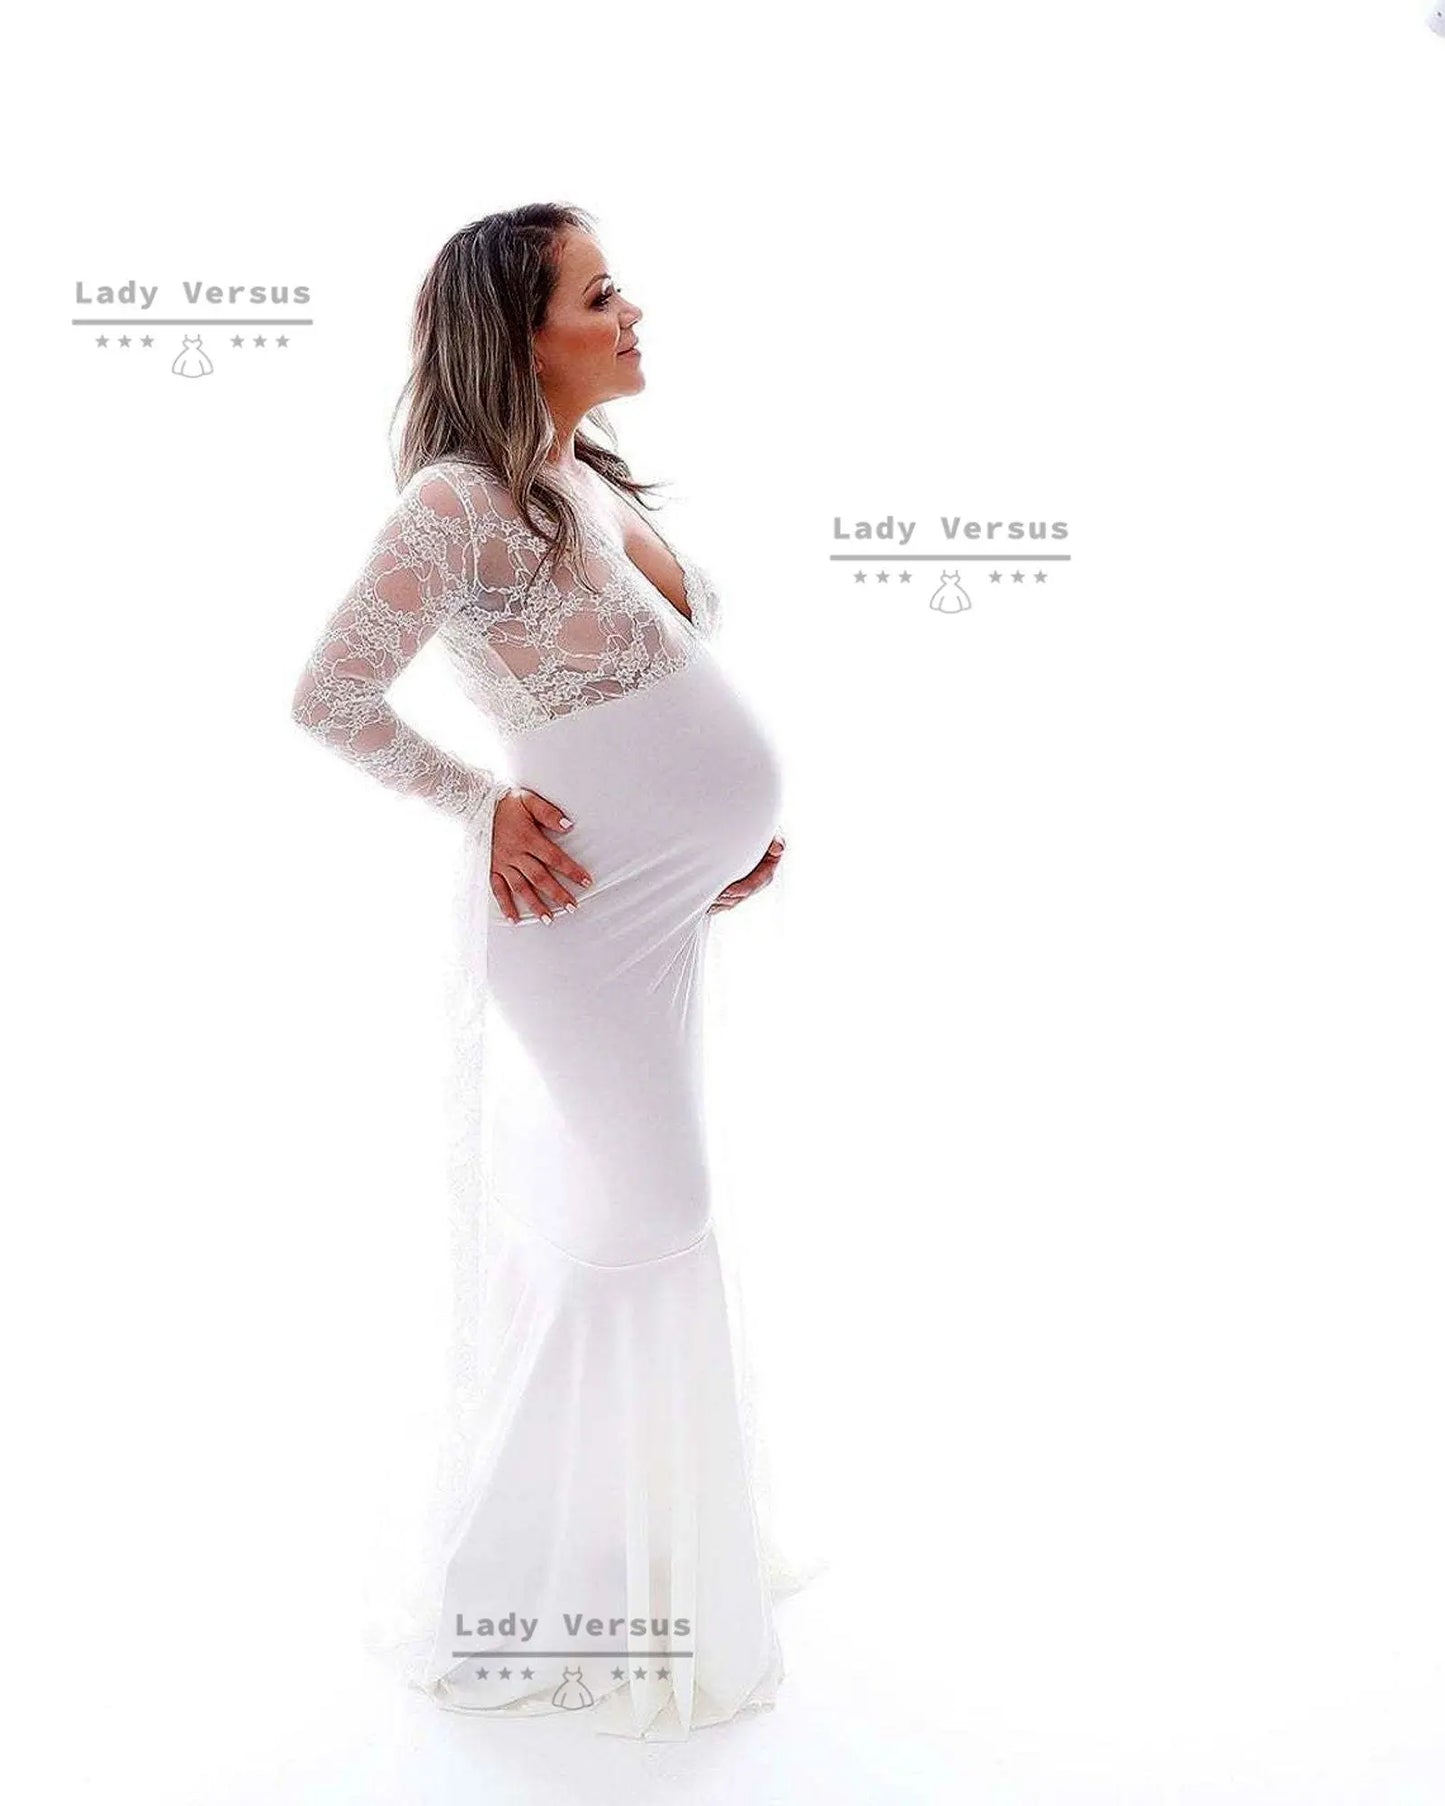 White top lace maternity Dress /Maternity Boudoir dress / Lace  Maternity Dress  / Photo Props/ Pregnancy photoshoot dress